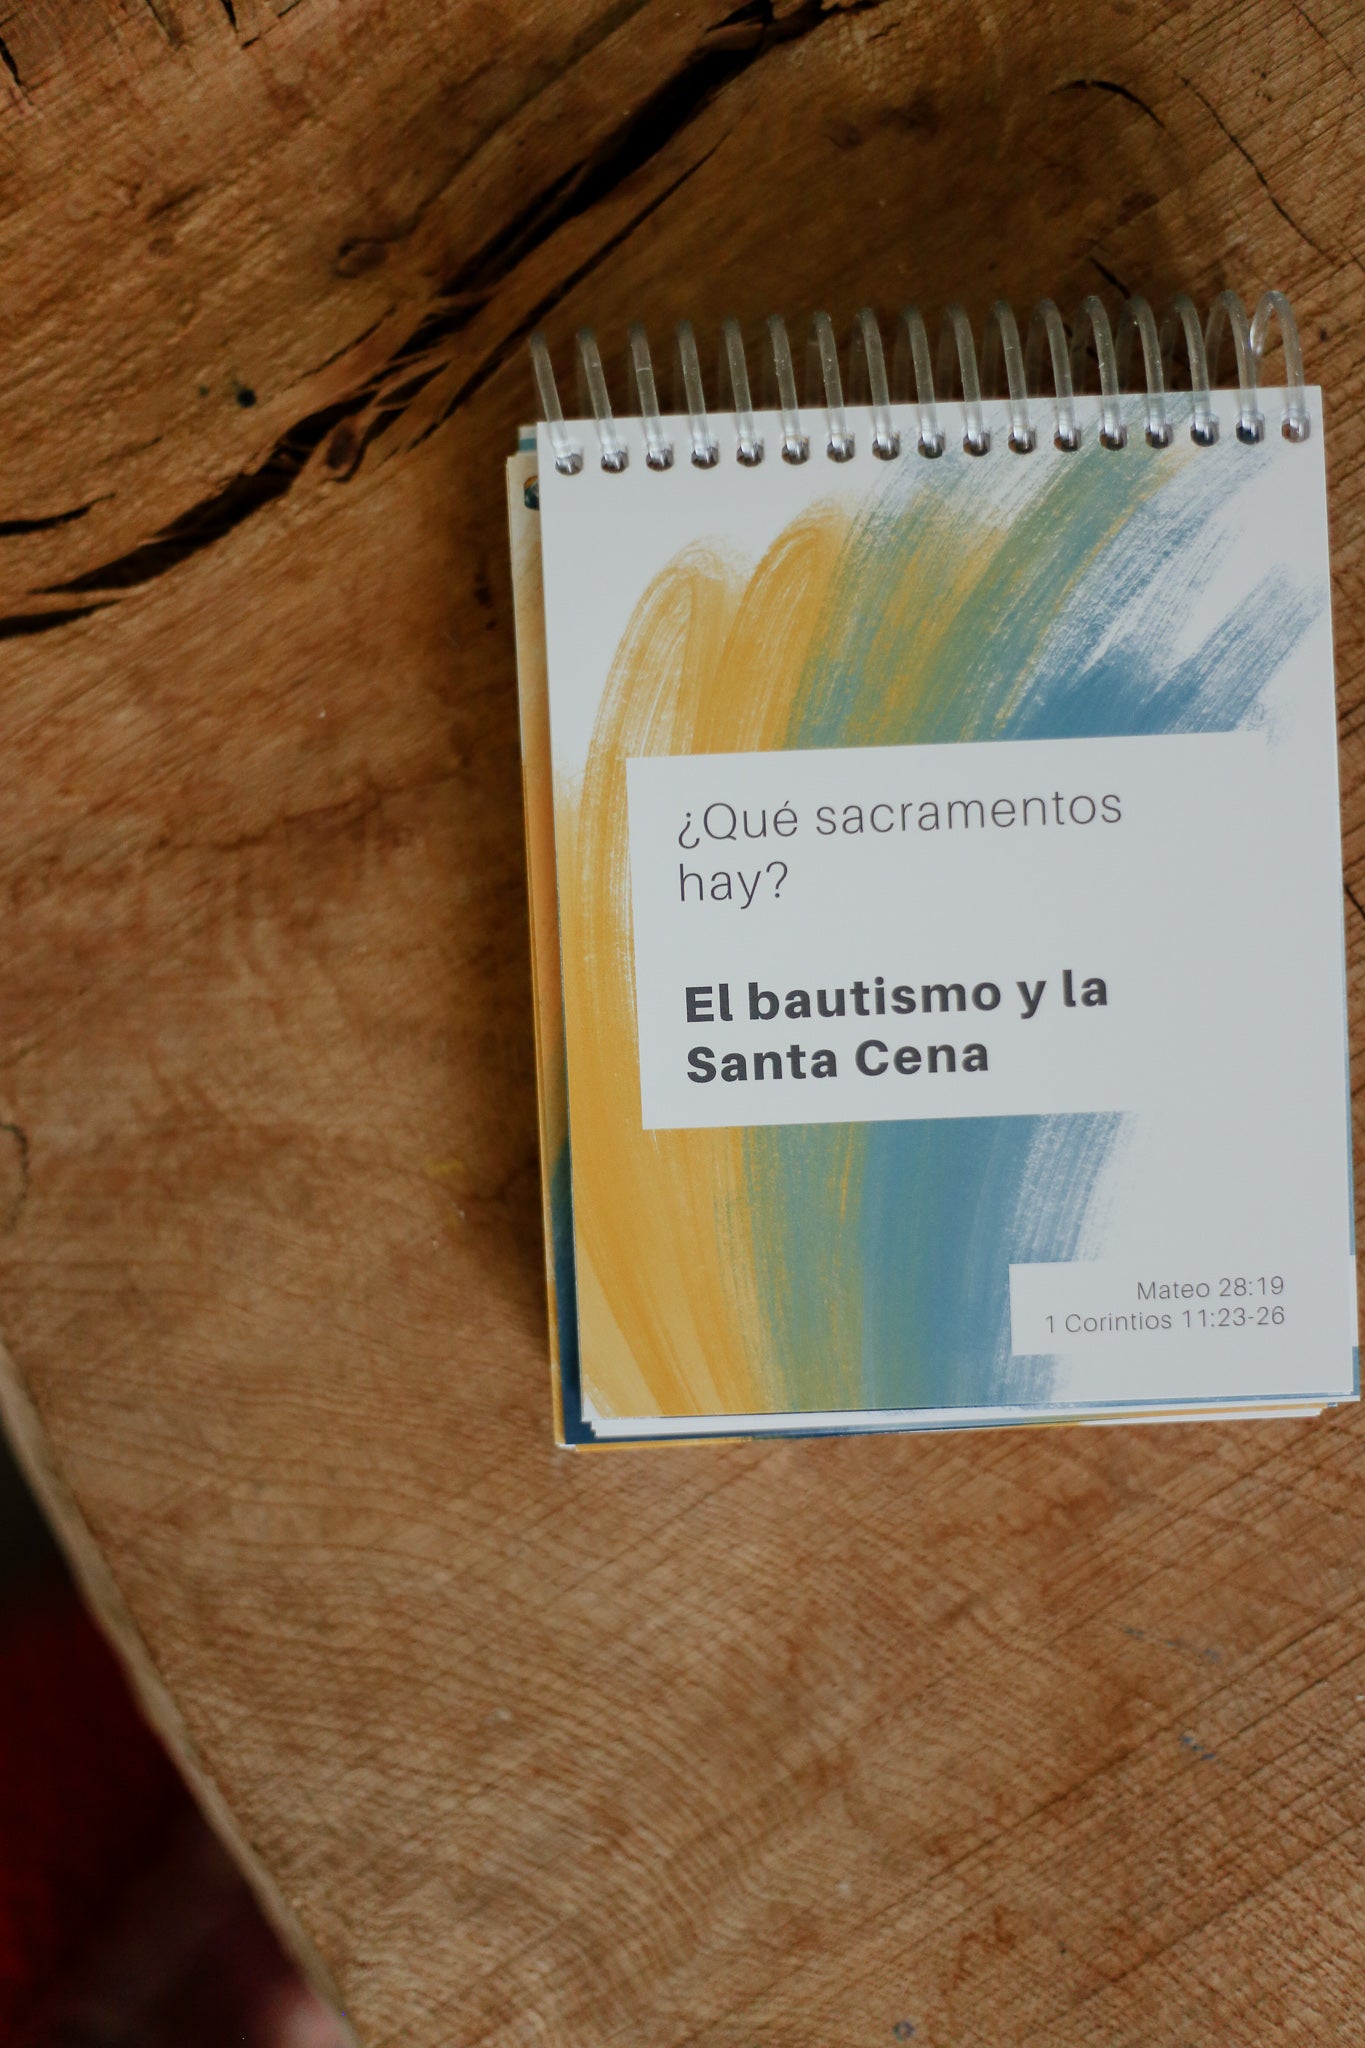 The Spanish Basics Catechism